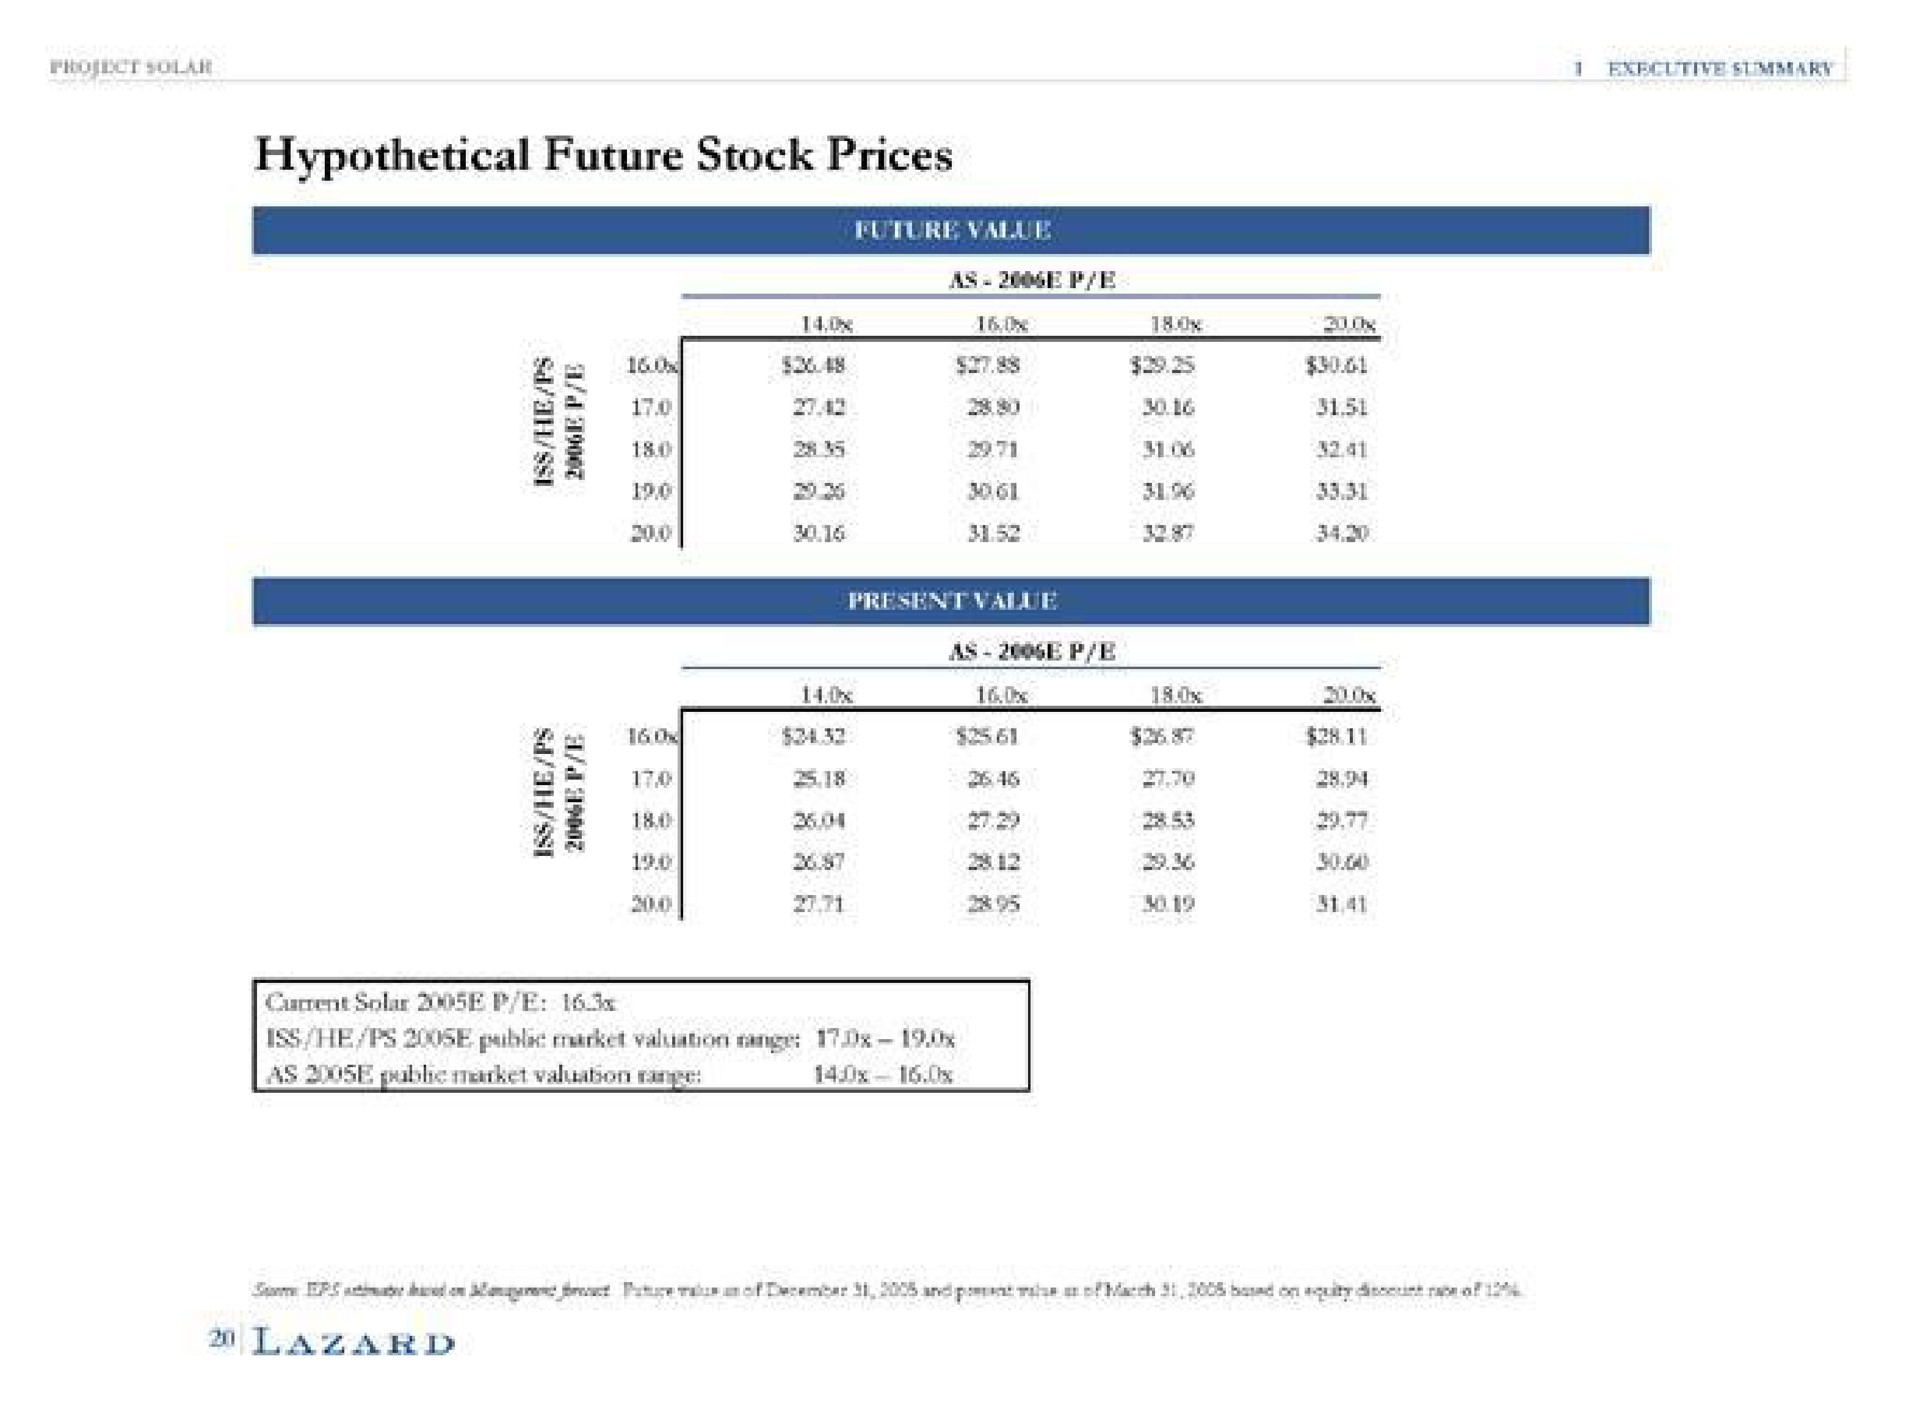 hypothetical future stock prices | Lazard